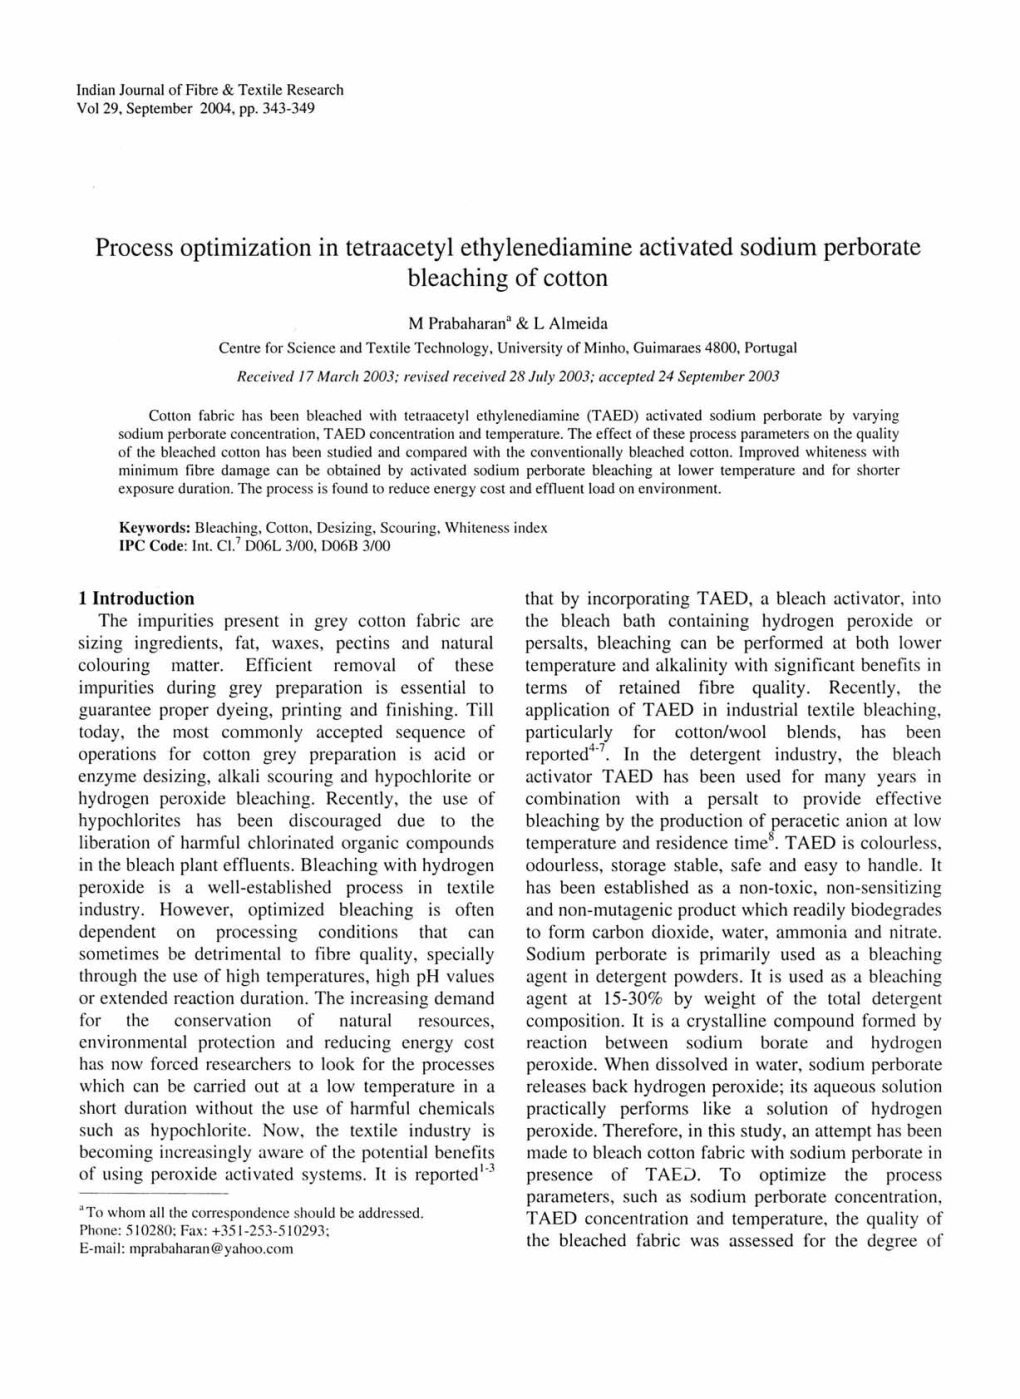 Process Optimization in Tetraacetyl Ethylenediamine Activated Sodium Perborate Bleaching of Cotton